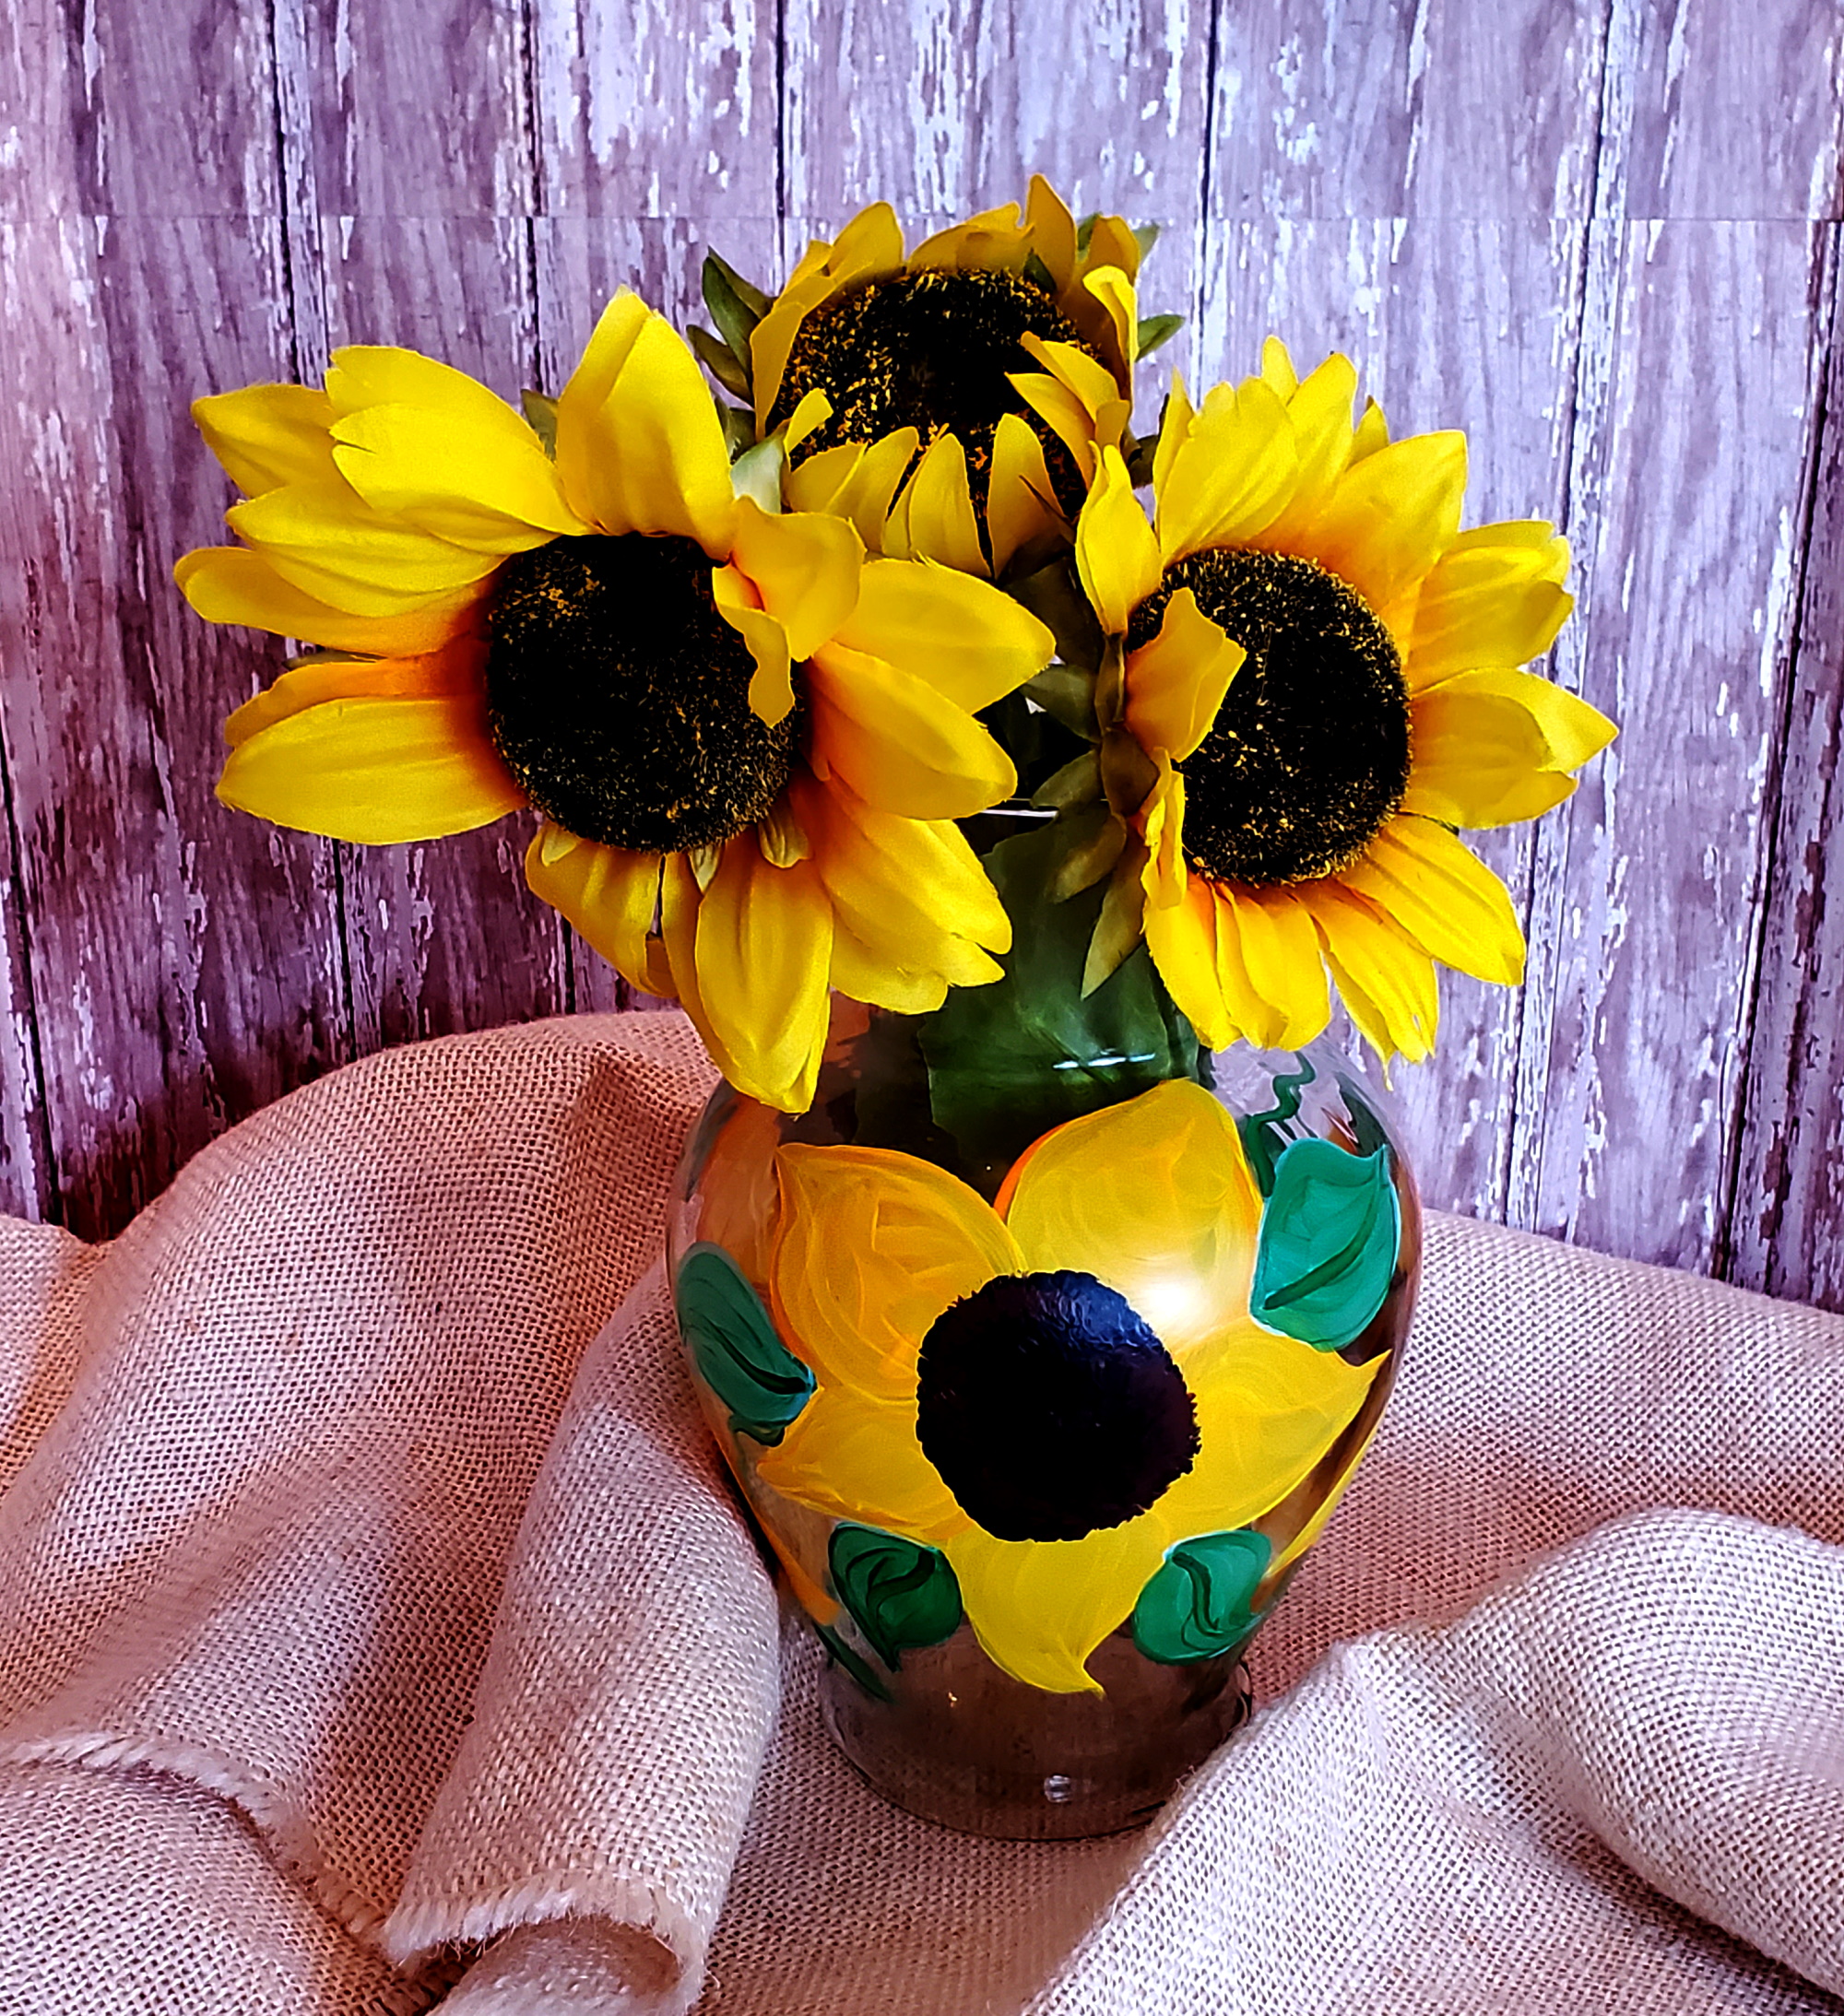 Personalized Country Sunflower Mason Jar Kitchen Towel Dish Cloth Pot  Holder Set